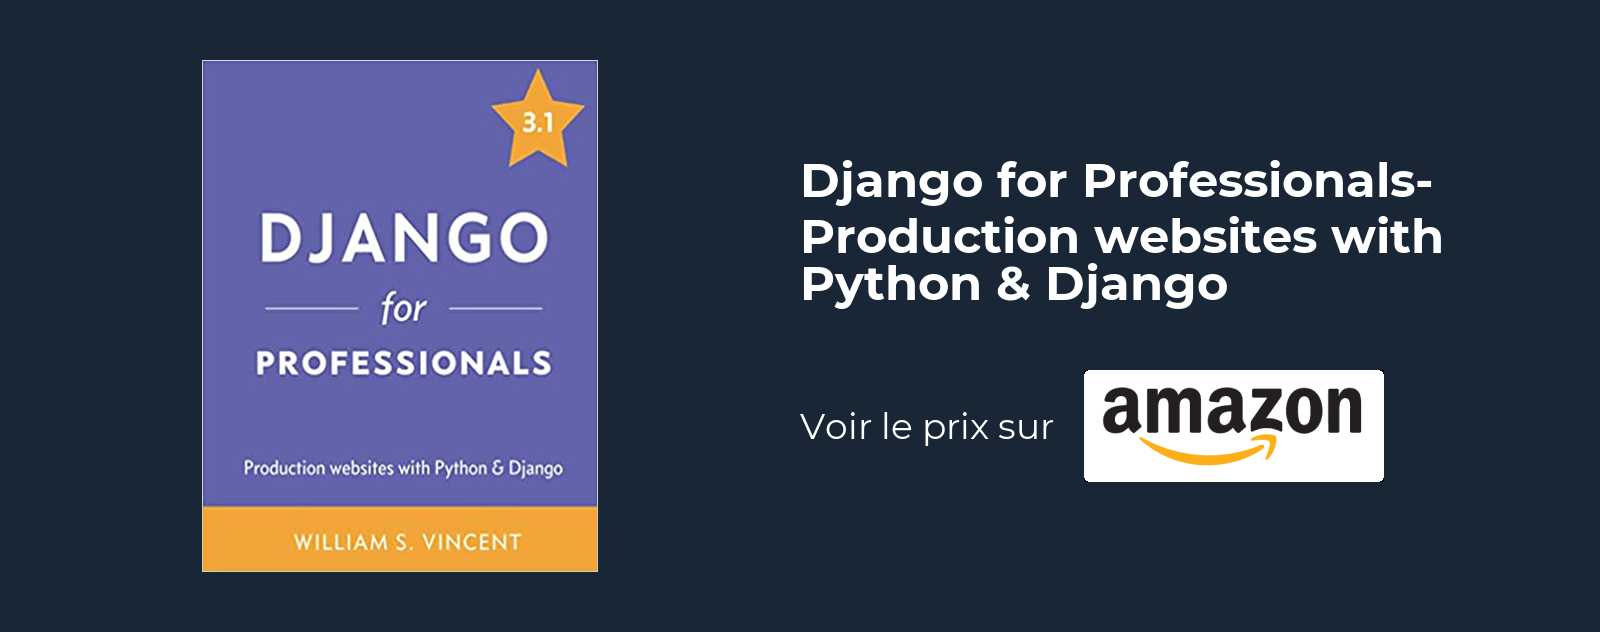 Django for Professionals- Production websites with Python & Django